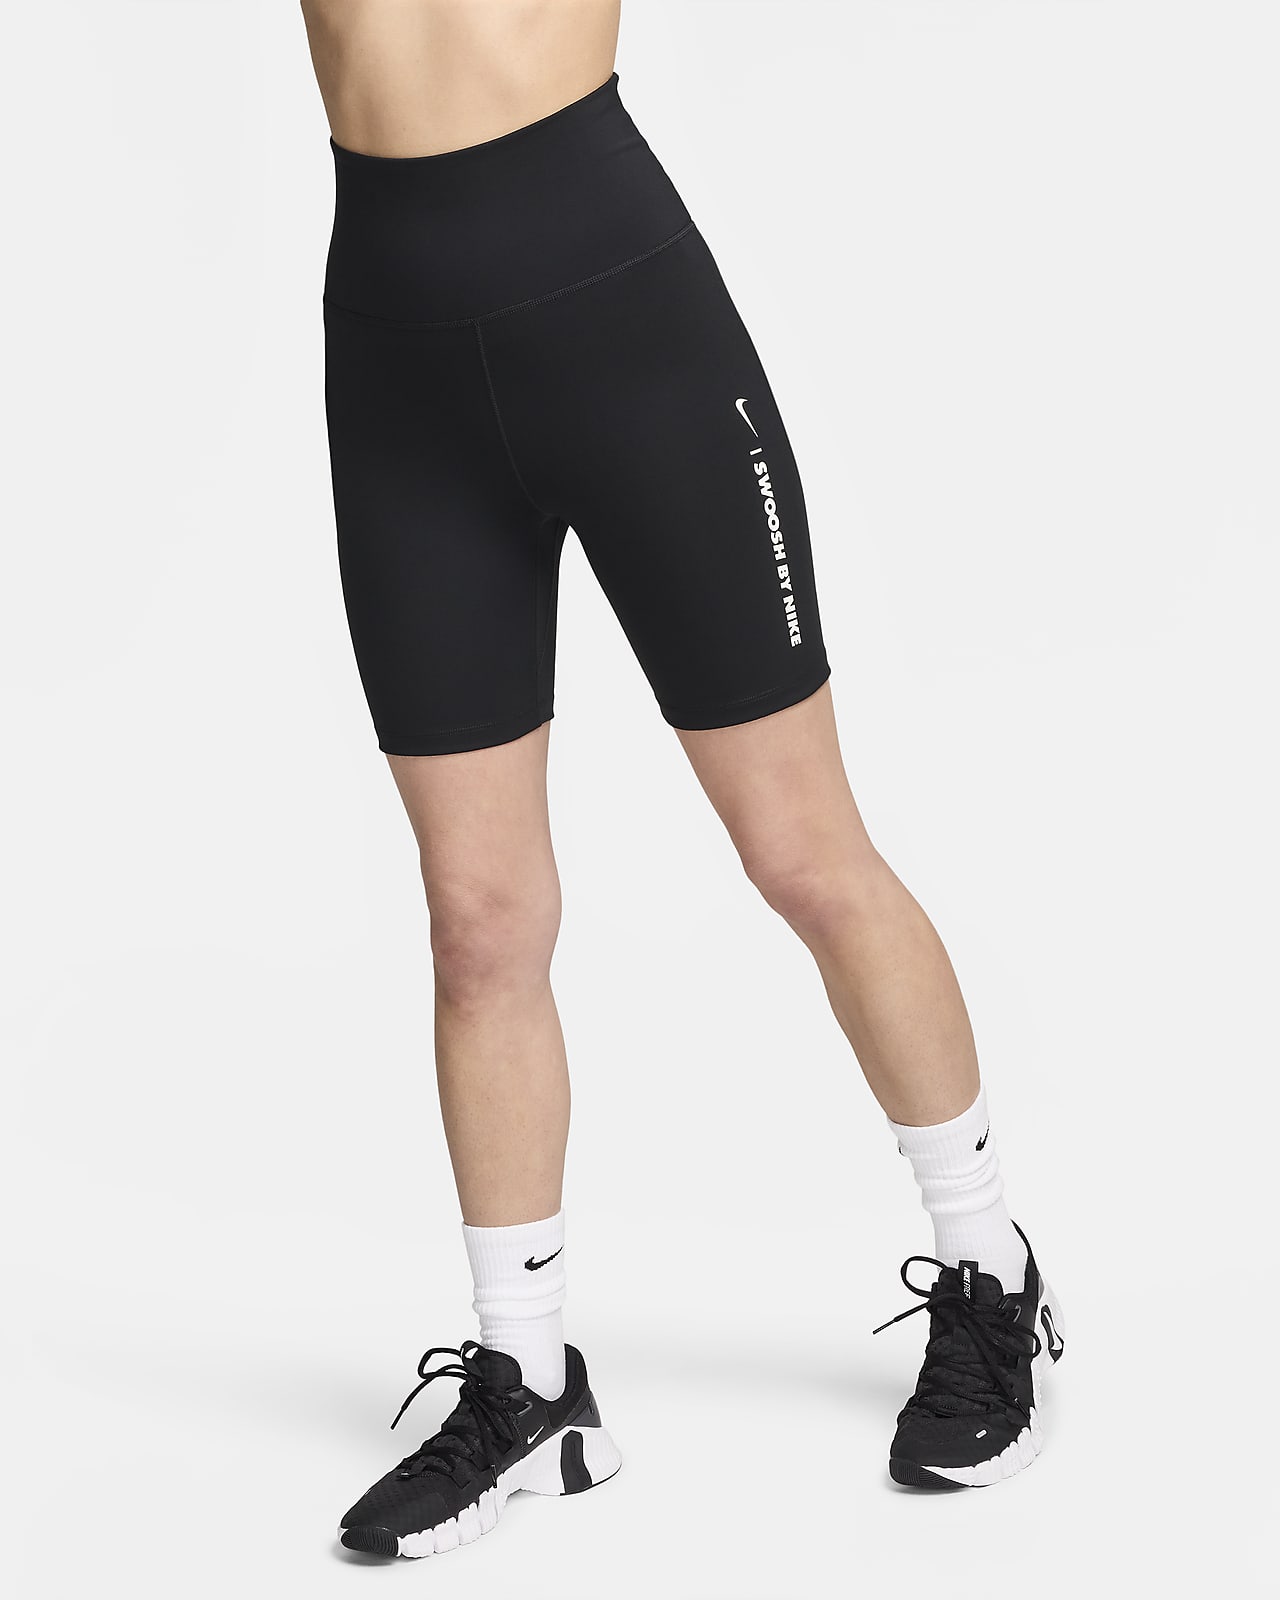 Cycliste taille haute 18 cm Nike One pour femme